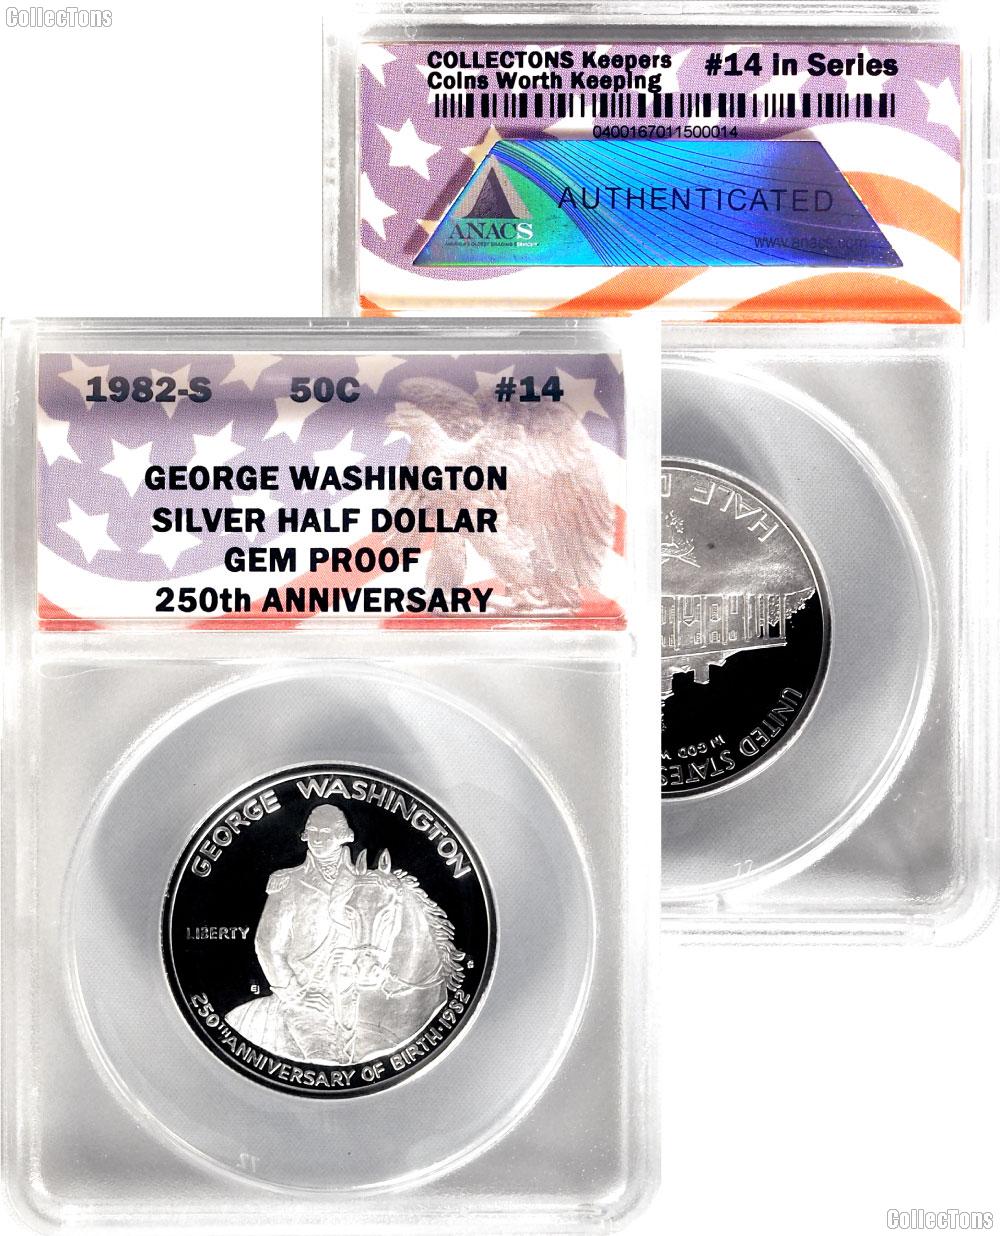 CollecTons Keeper #14: 1982-S George Washington Proof Half Dollar